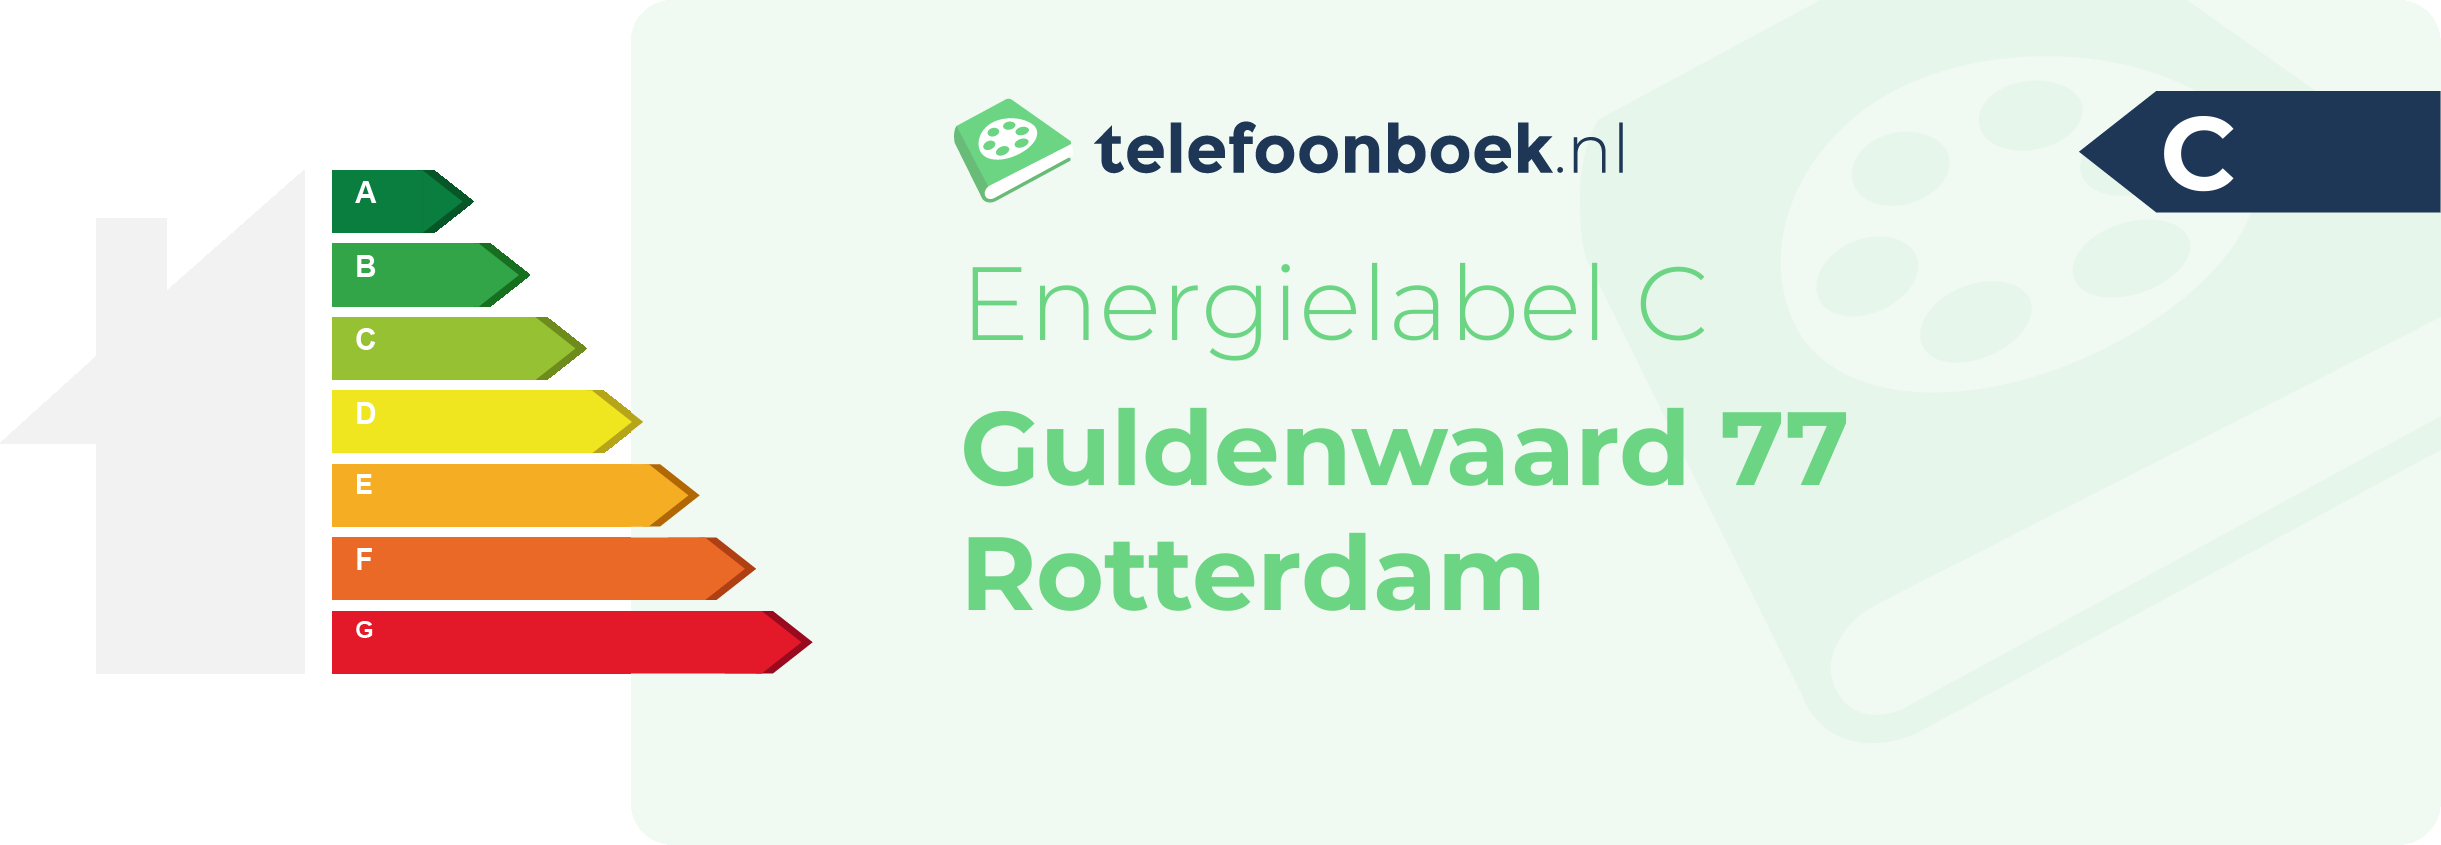 Energielabel Guldenwaard 77 Rotterdam